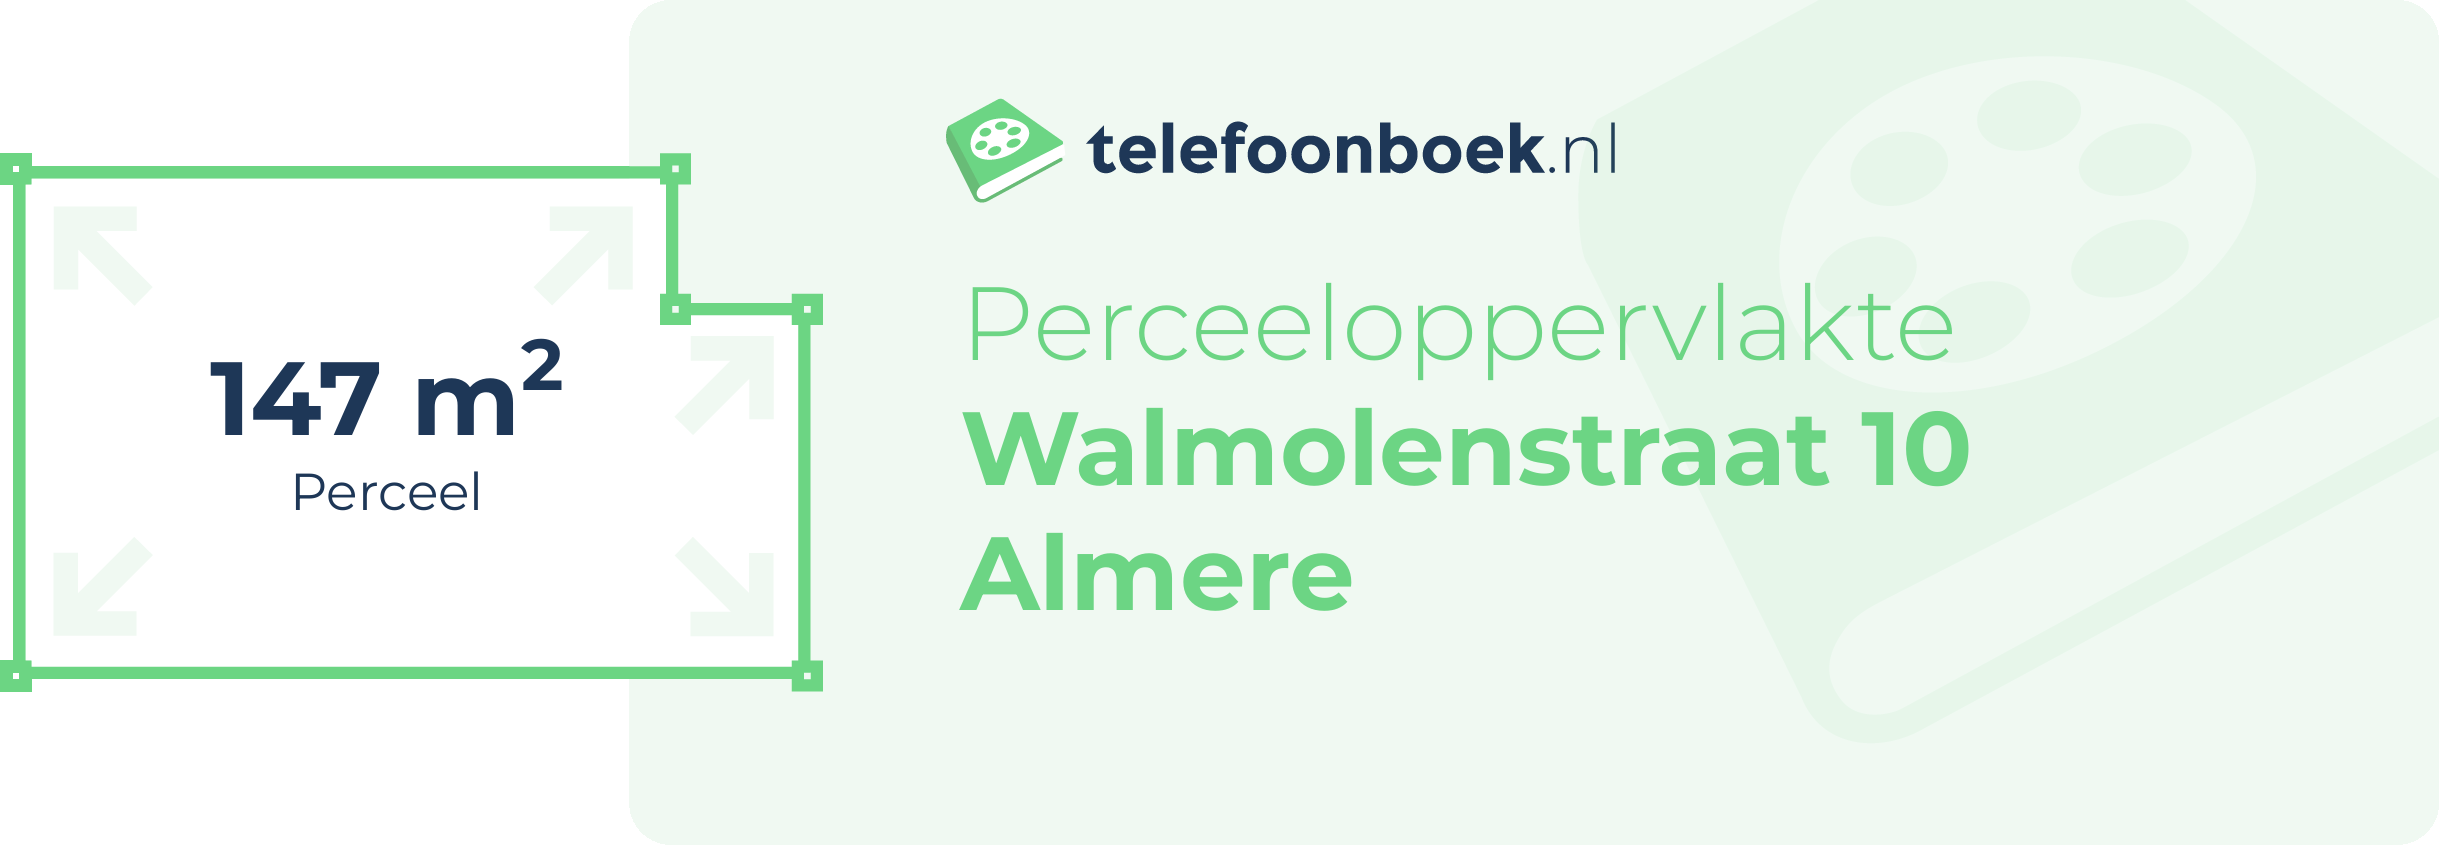 Perceeloppervlakte Walmolenstraat 10 Almere